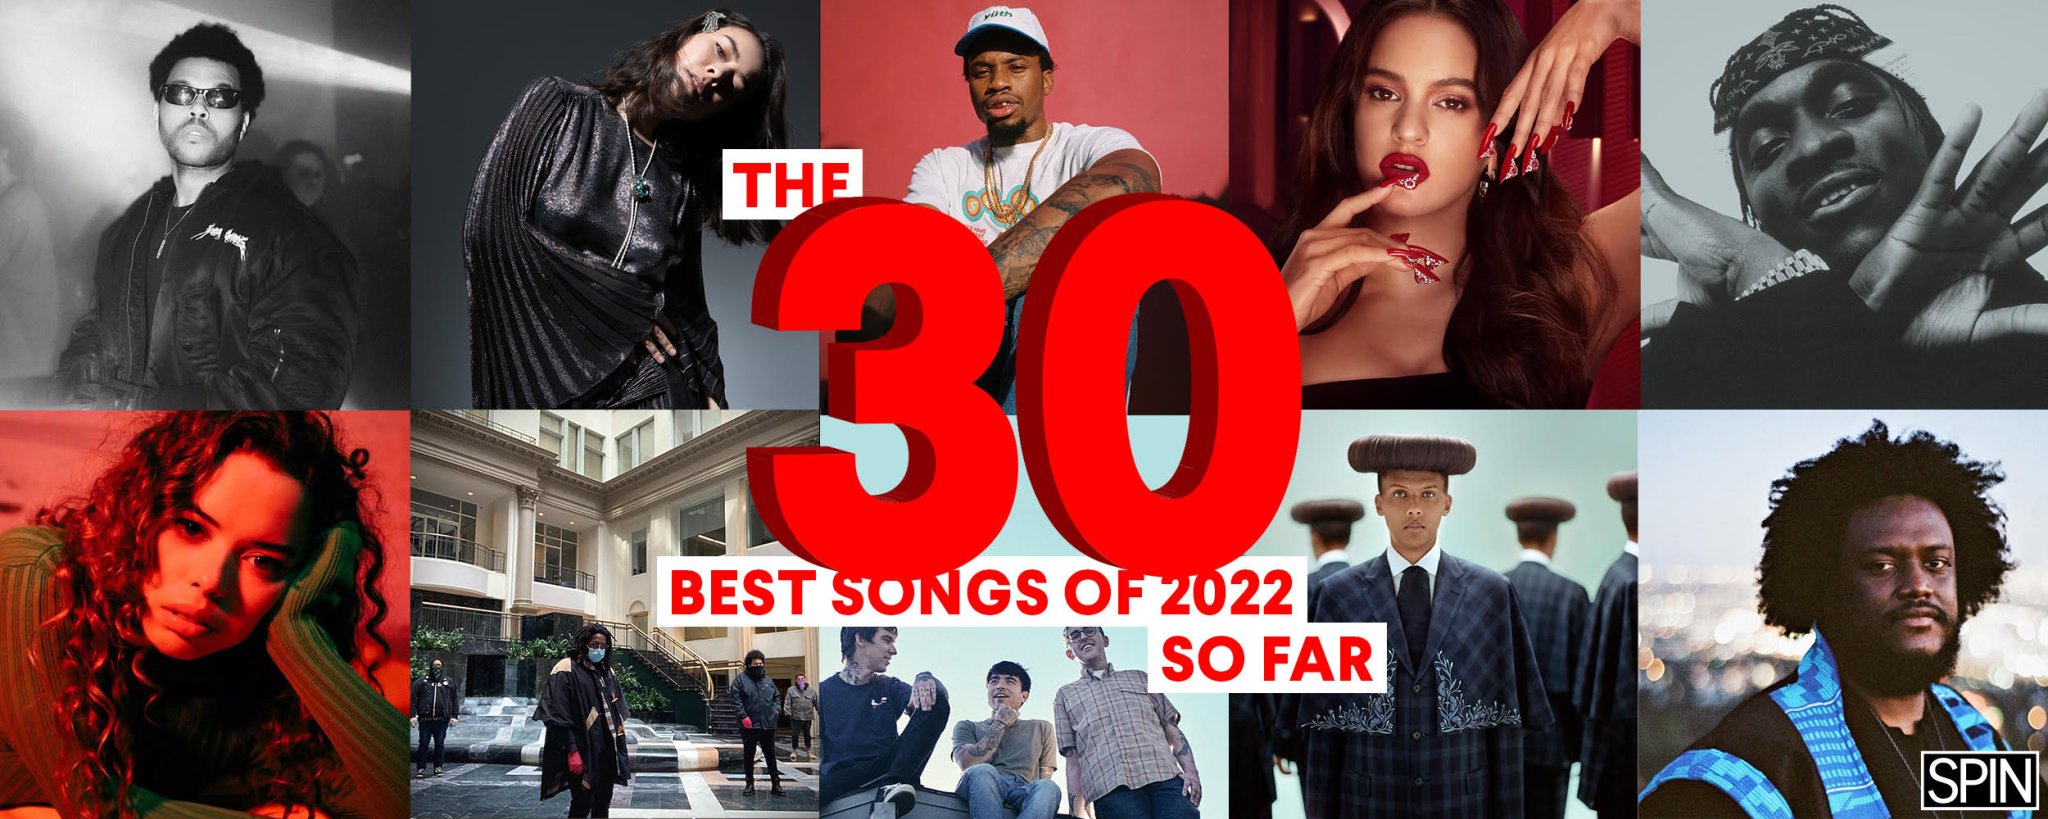 The 30 Best Songs of 2022 (So Far)